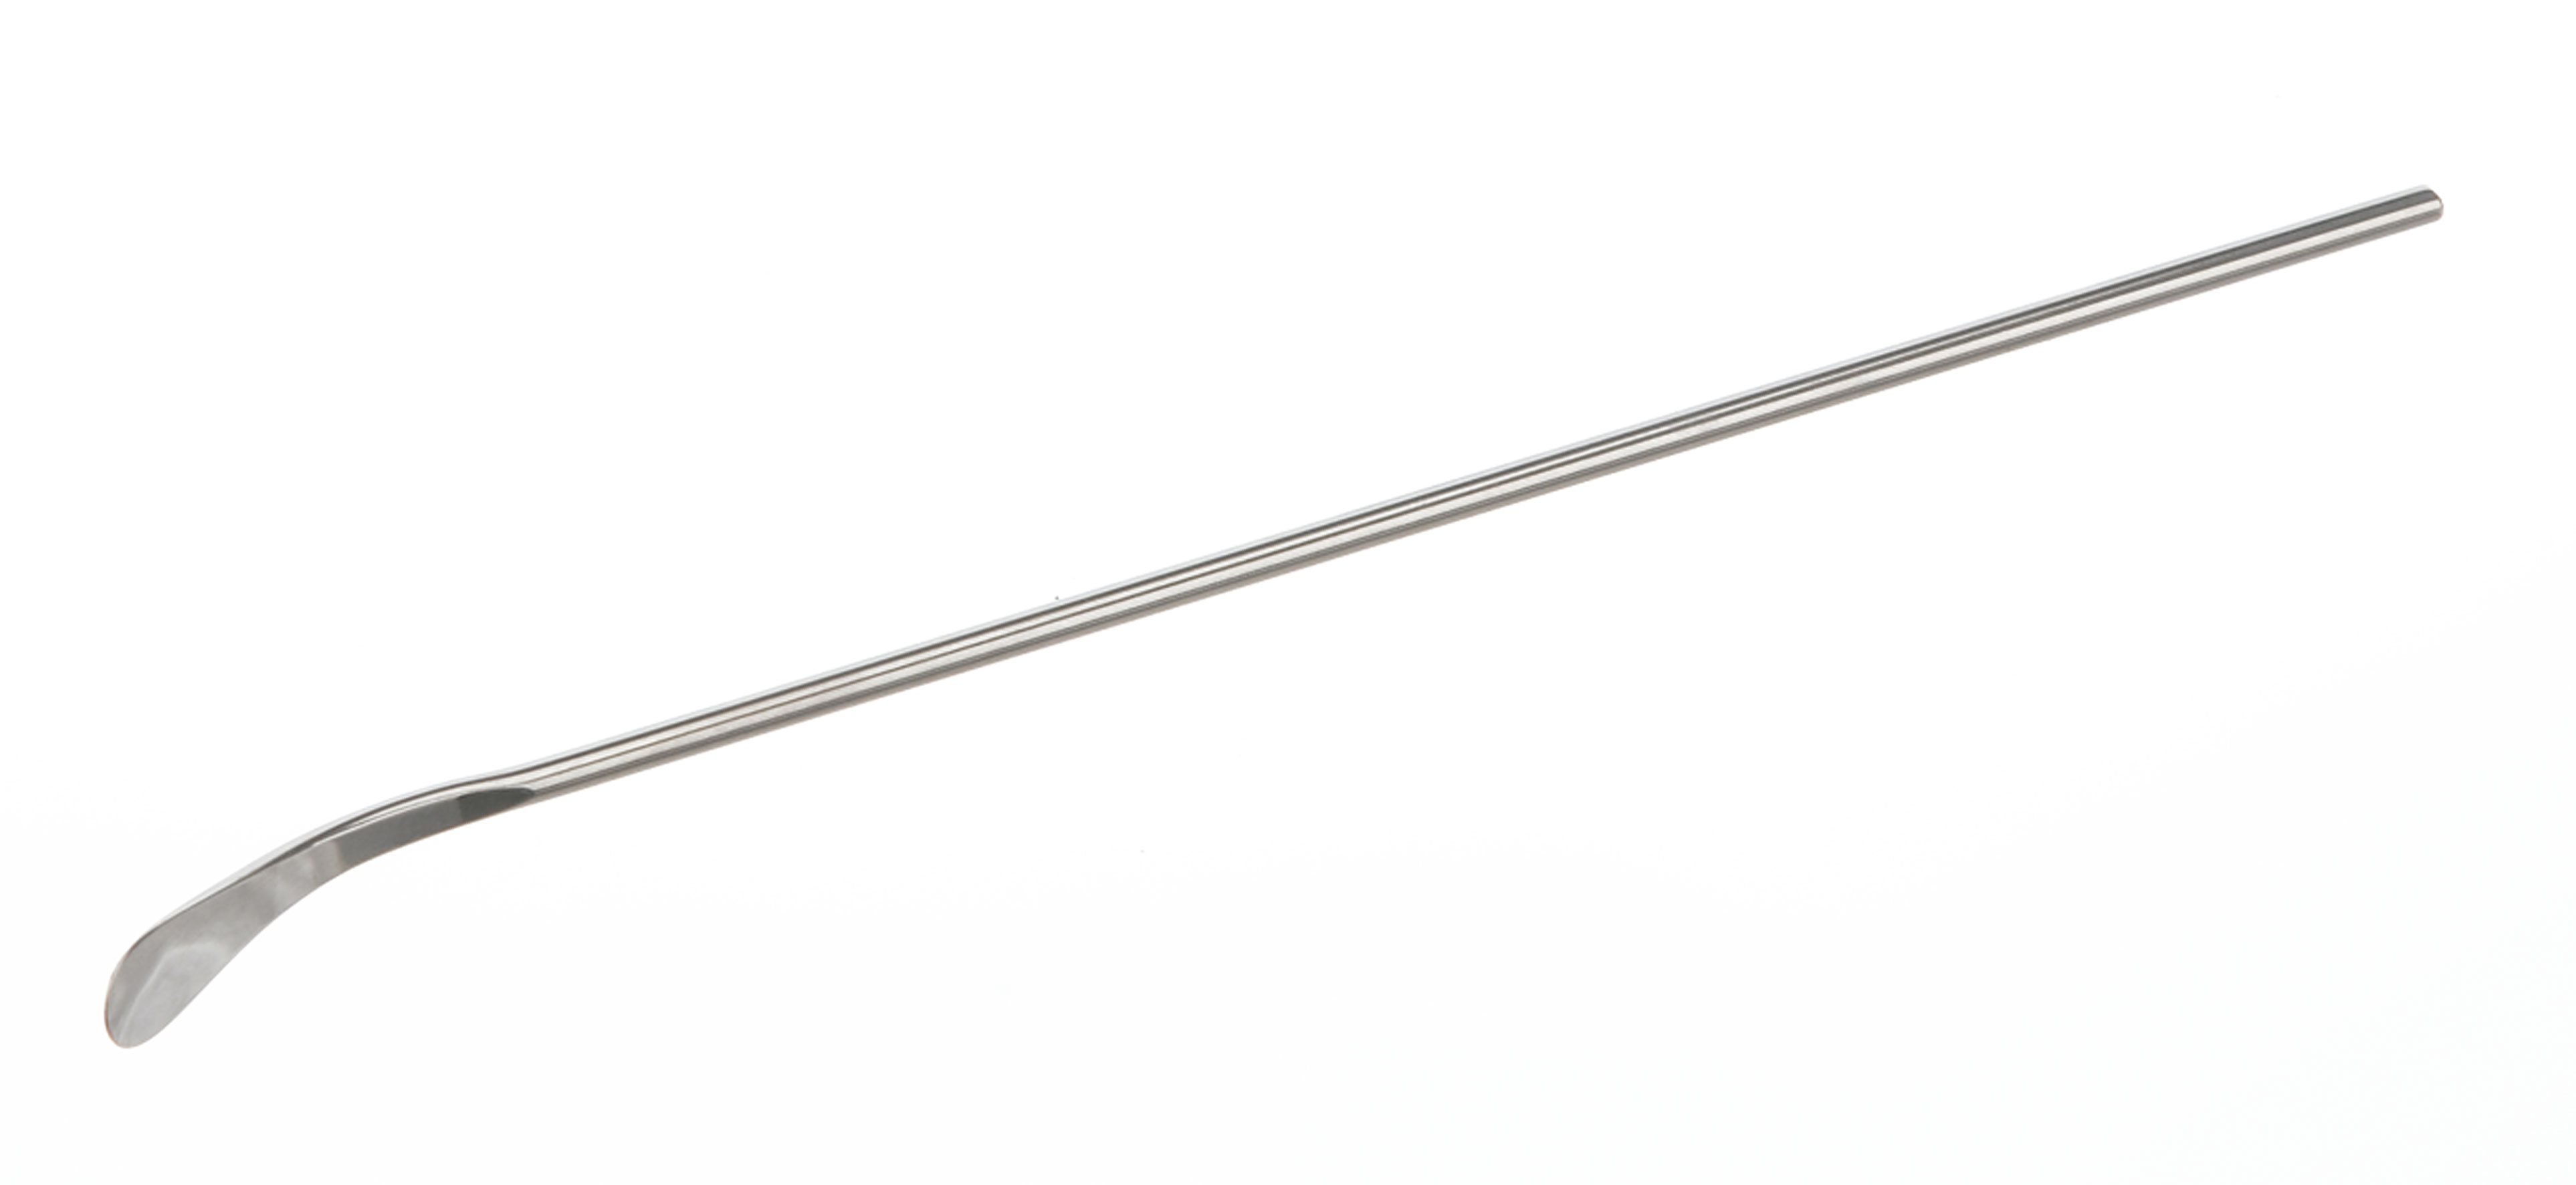 Spoon shaped spatula. Length/Width (mm): 5x130